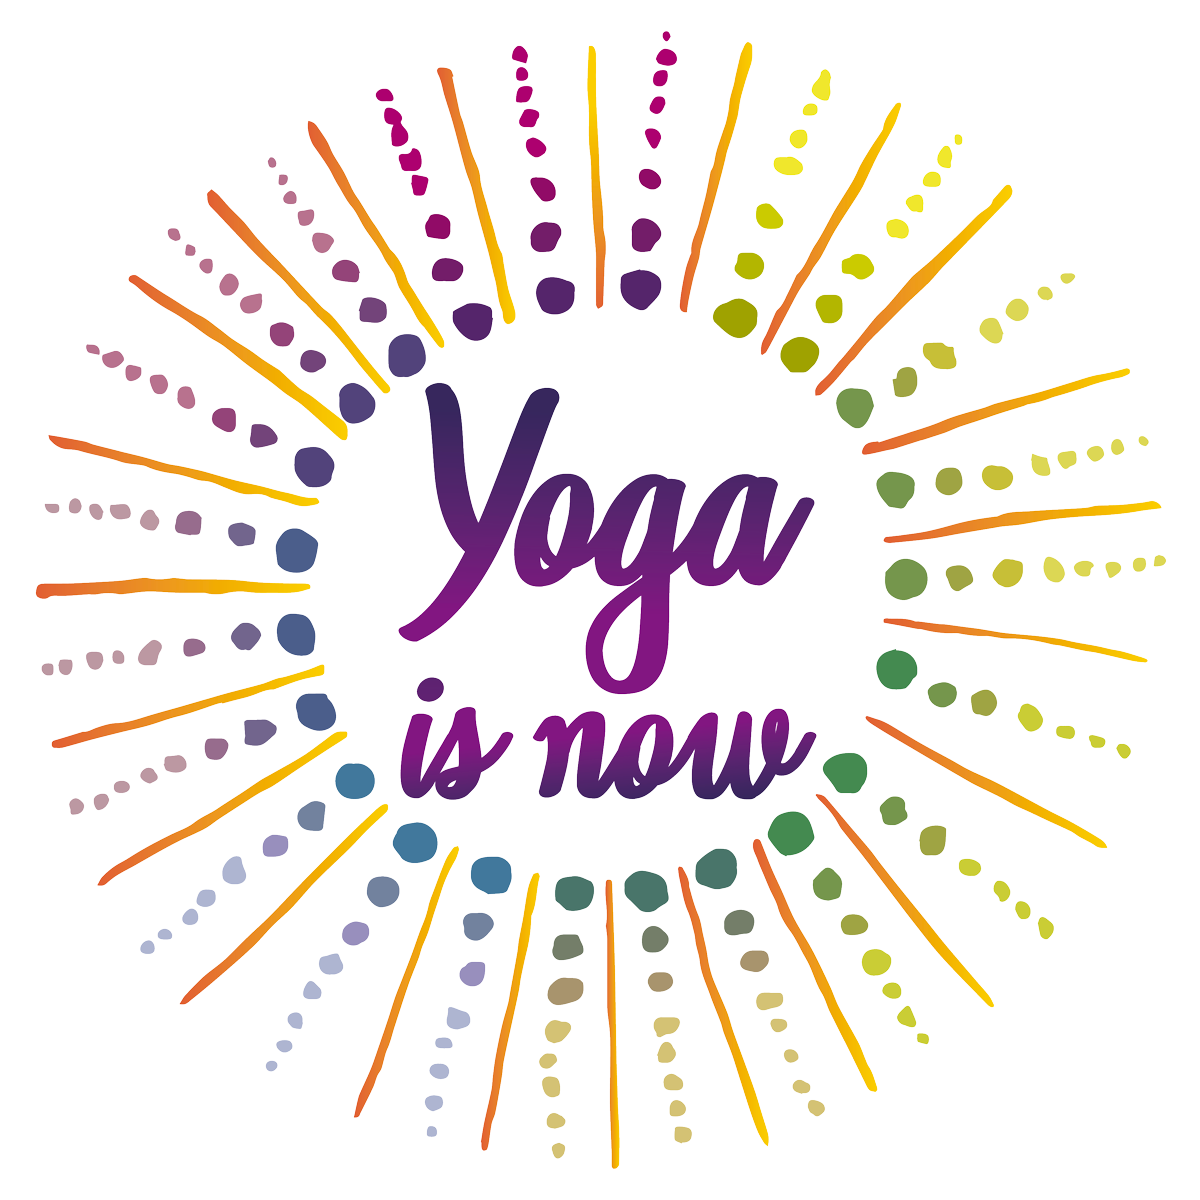 Yoga is now Lyon Villeurbanne Pilates